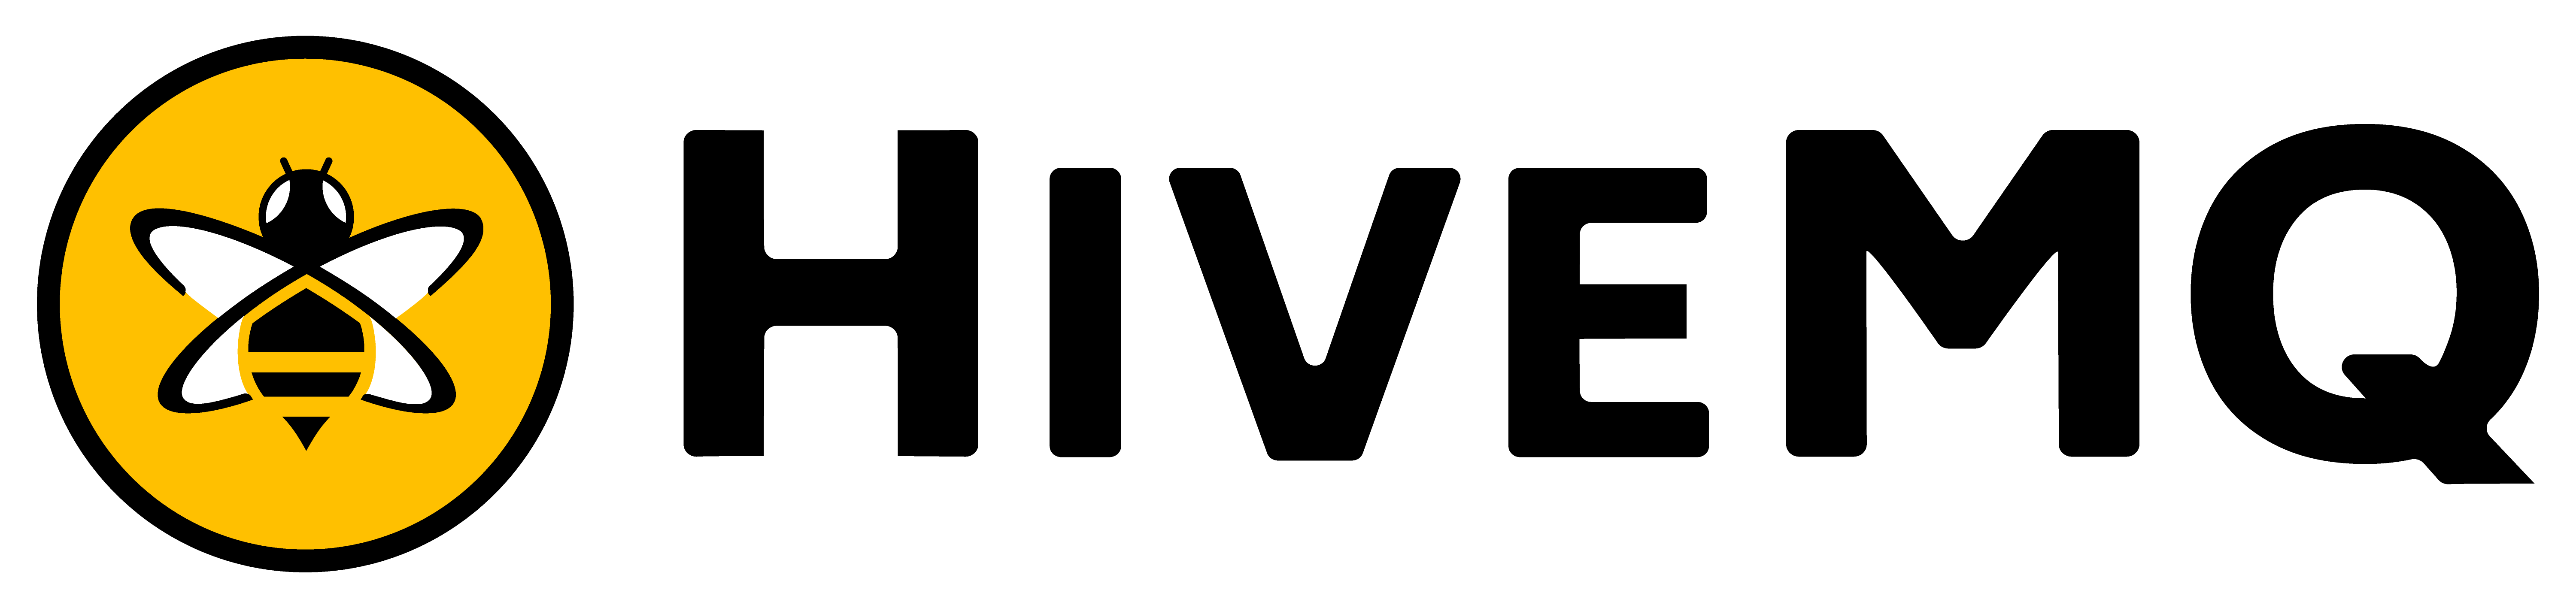 HiveMQ Logo PNG Transparent Background